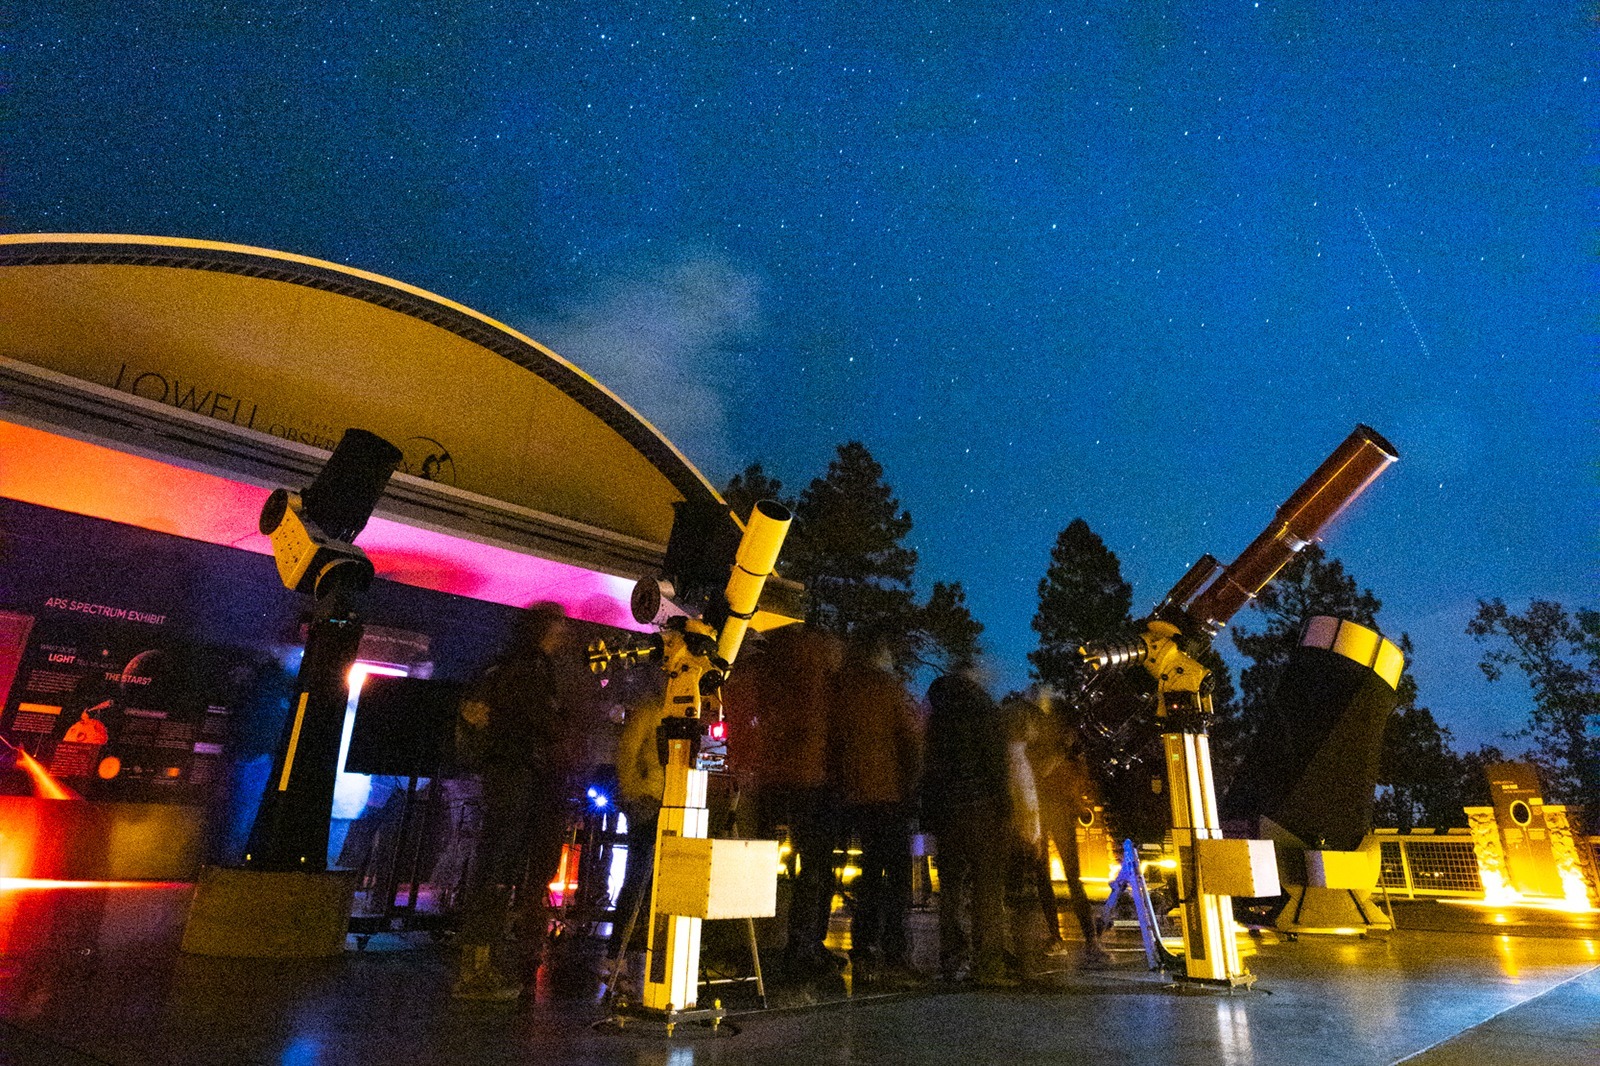 The Lowell Observatory in Flagstaff, AZ